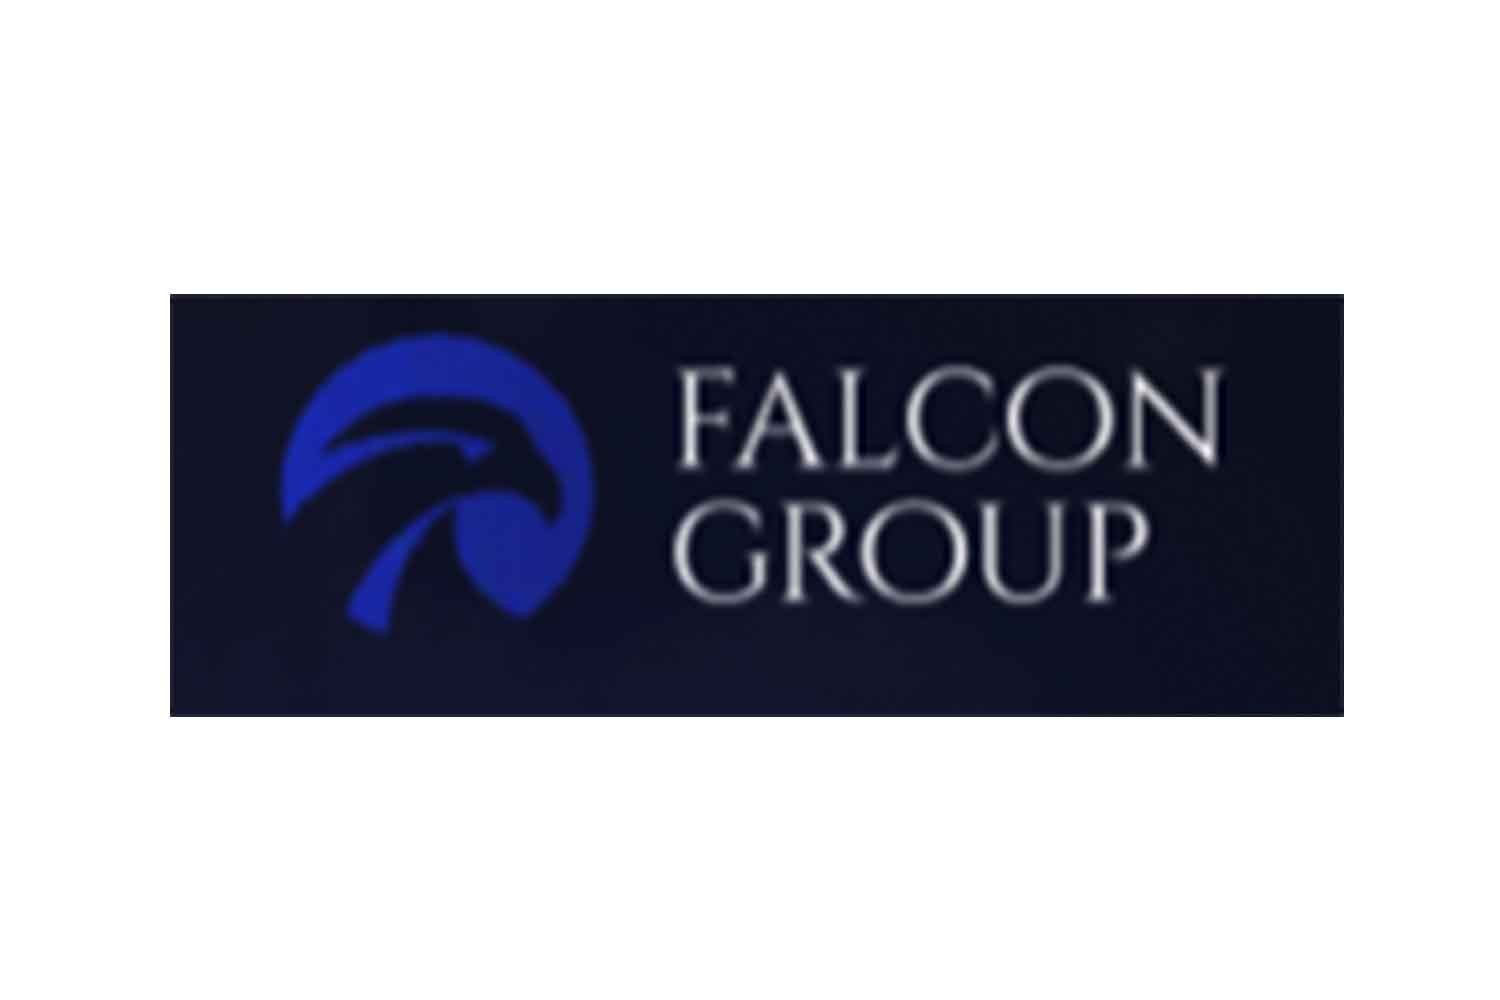 Фалкон груп. Falcon Group.